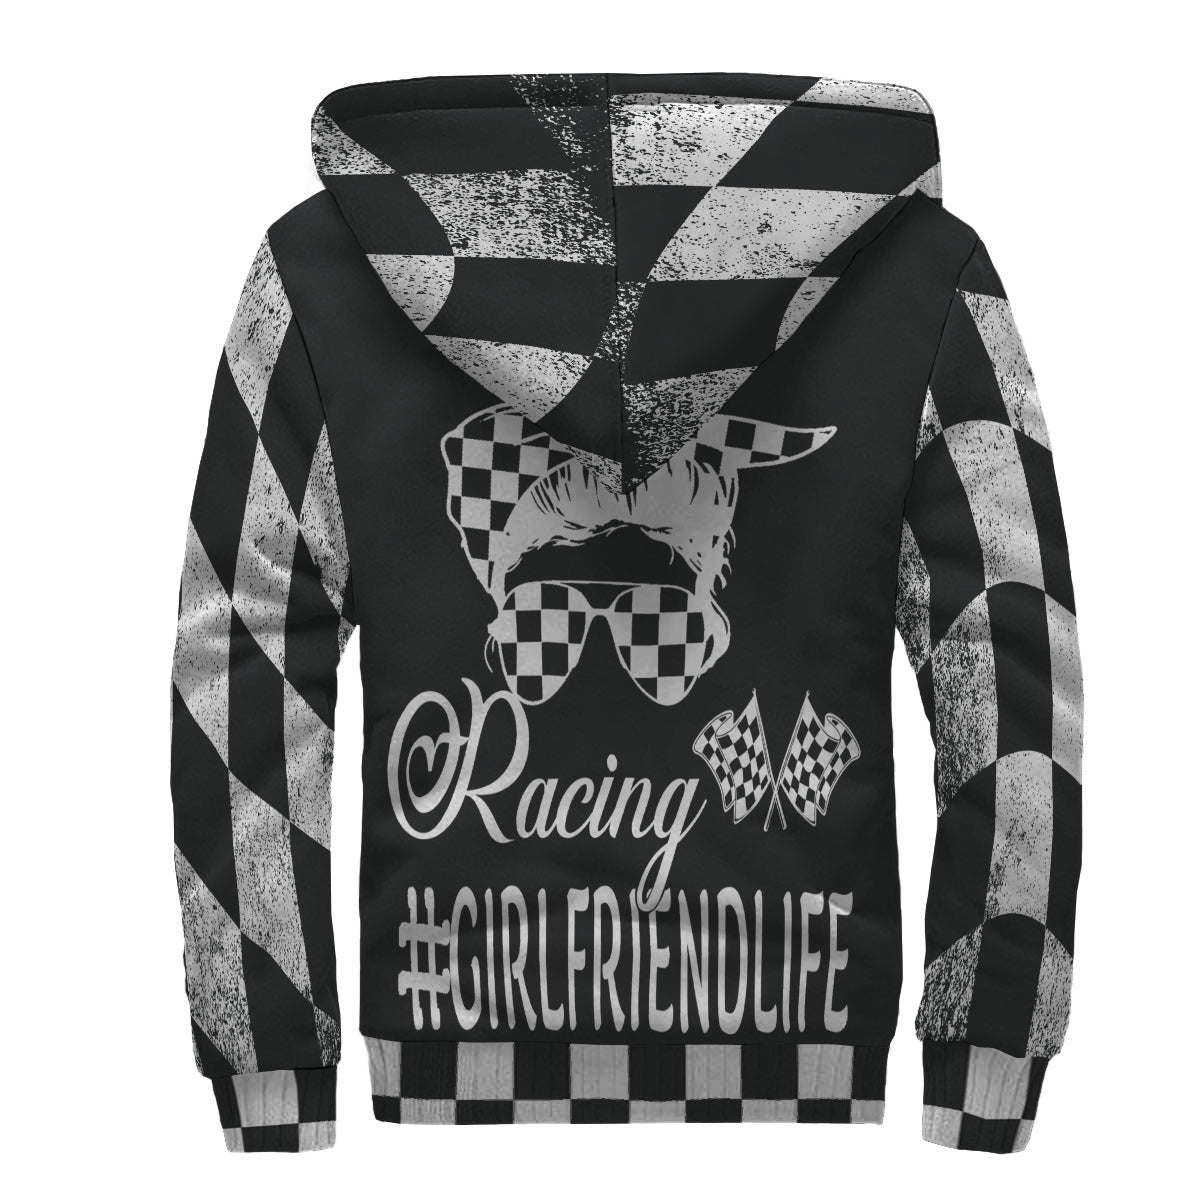 Racing girlfriend jacket